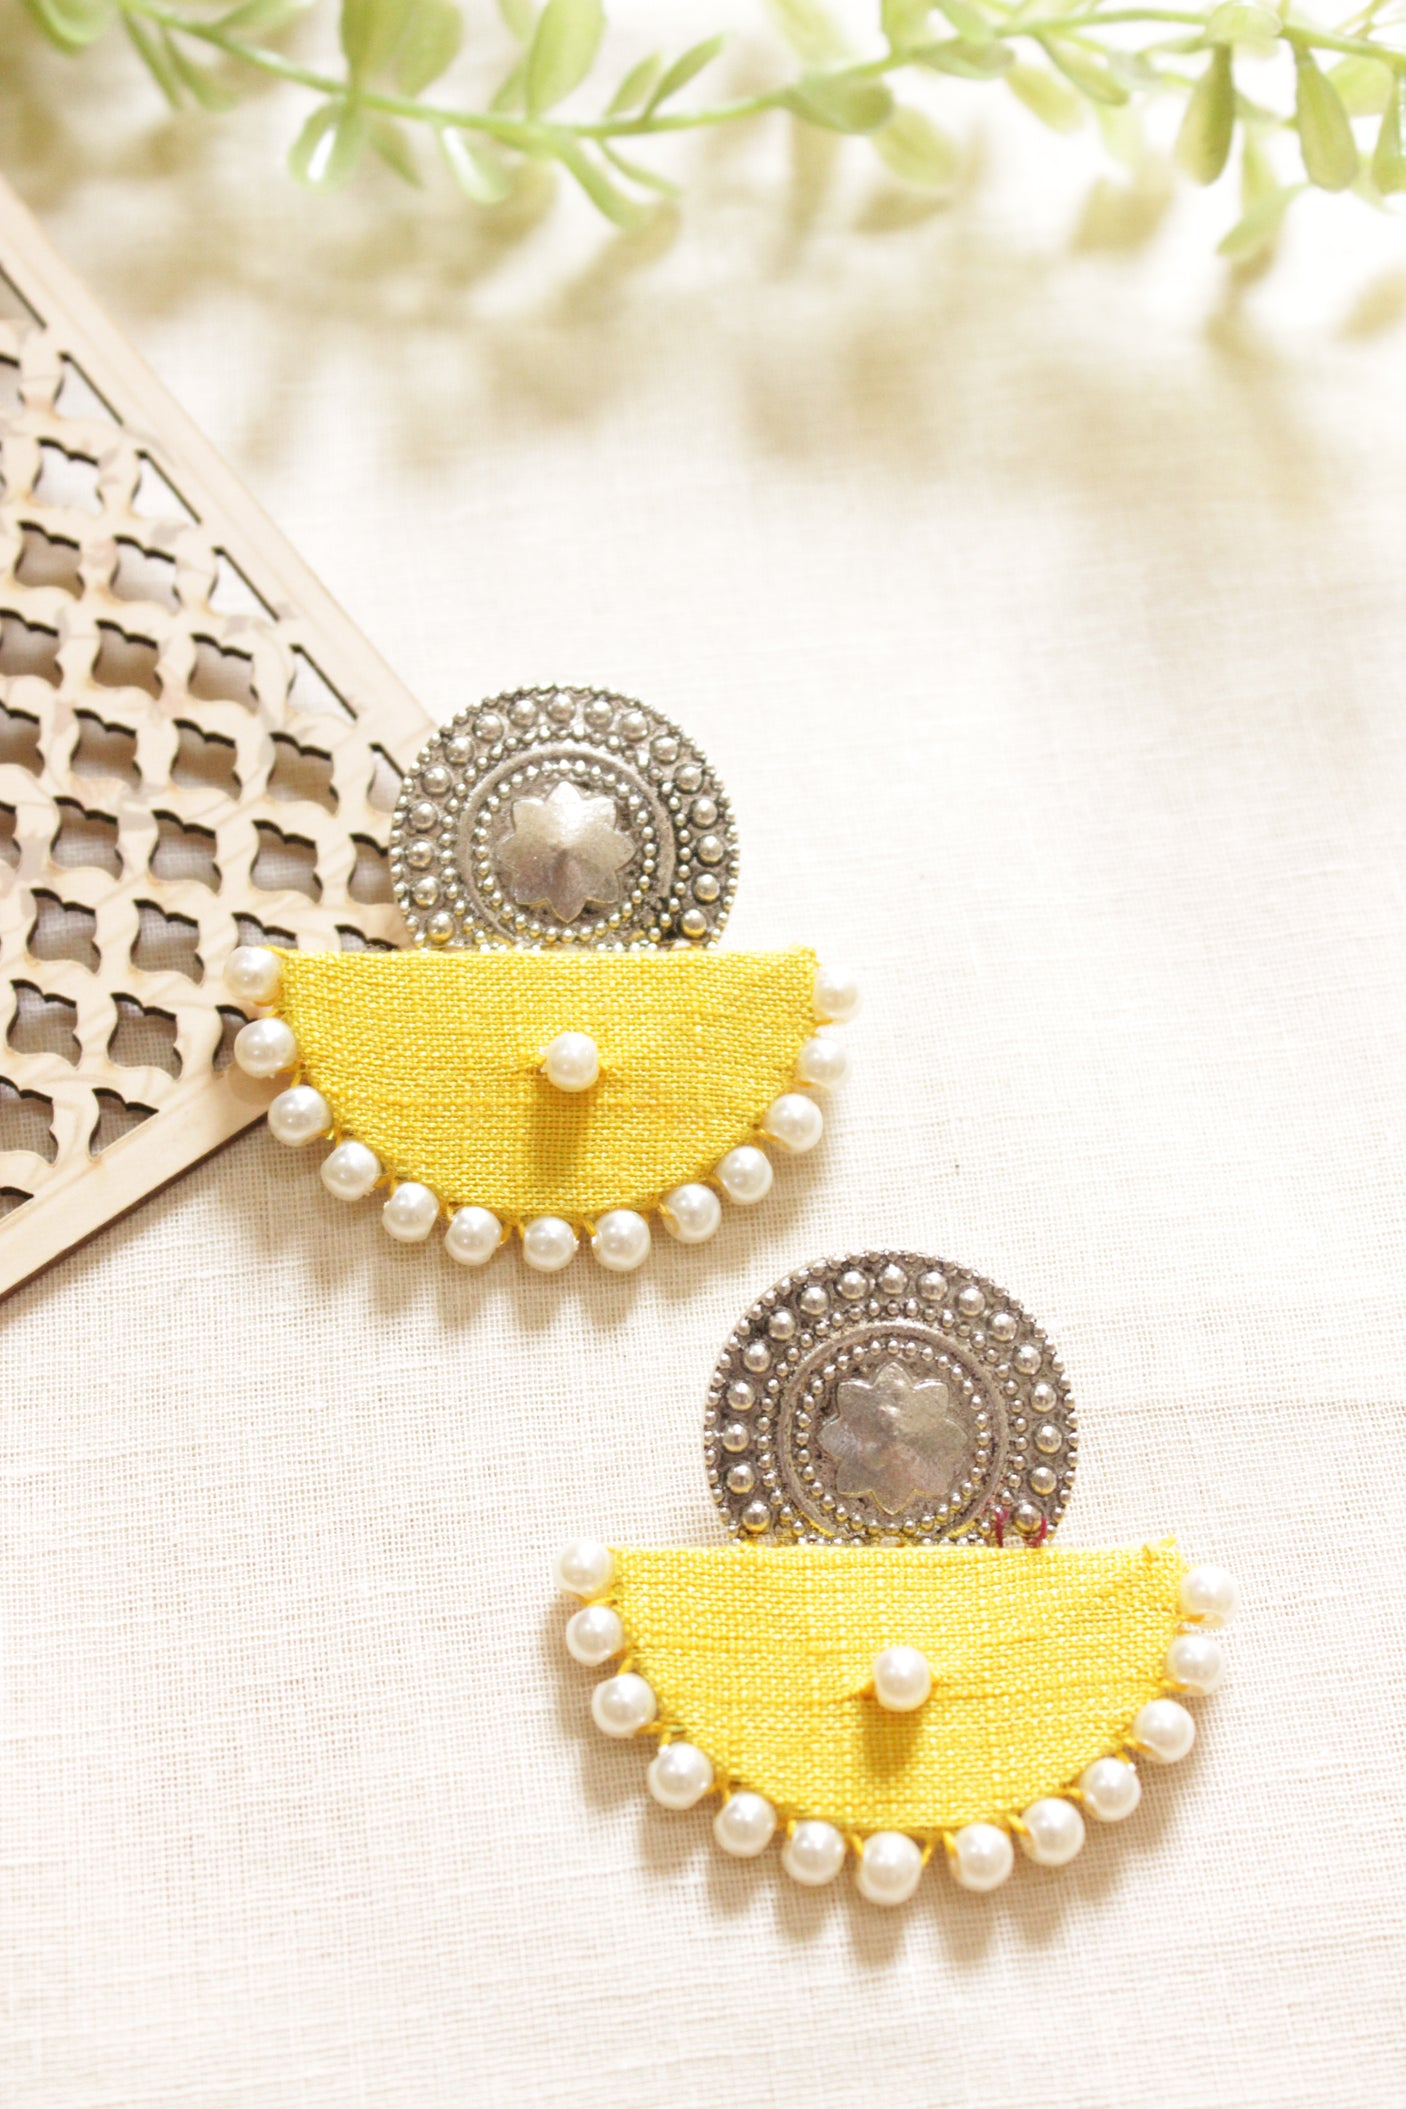 Fabric & Metal White Beads Embellished Half Moon Fabric Earrings